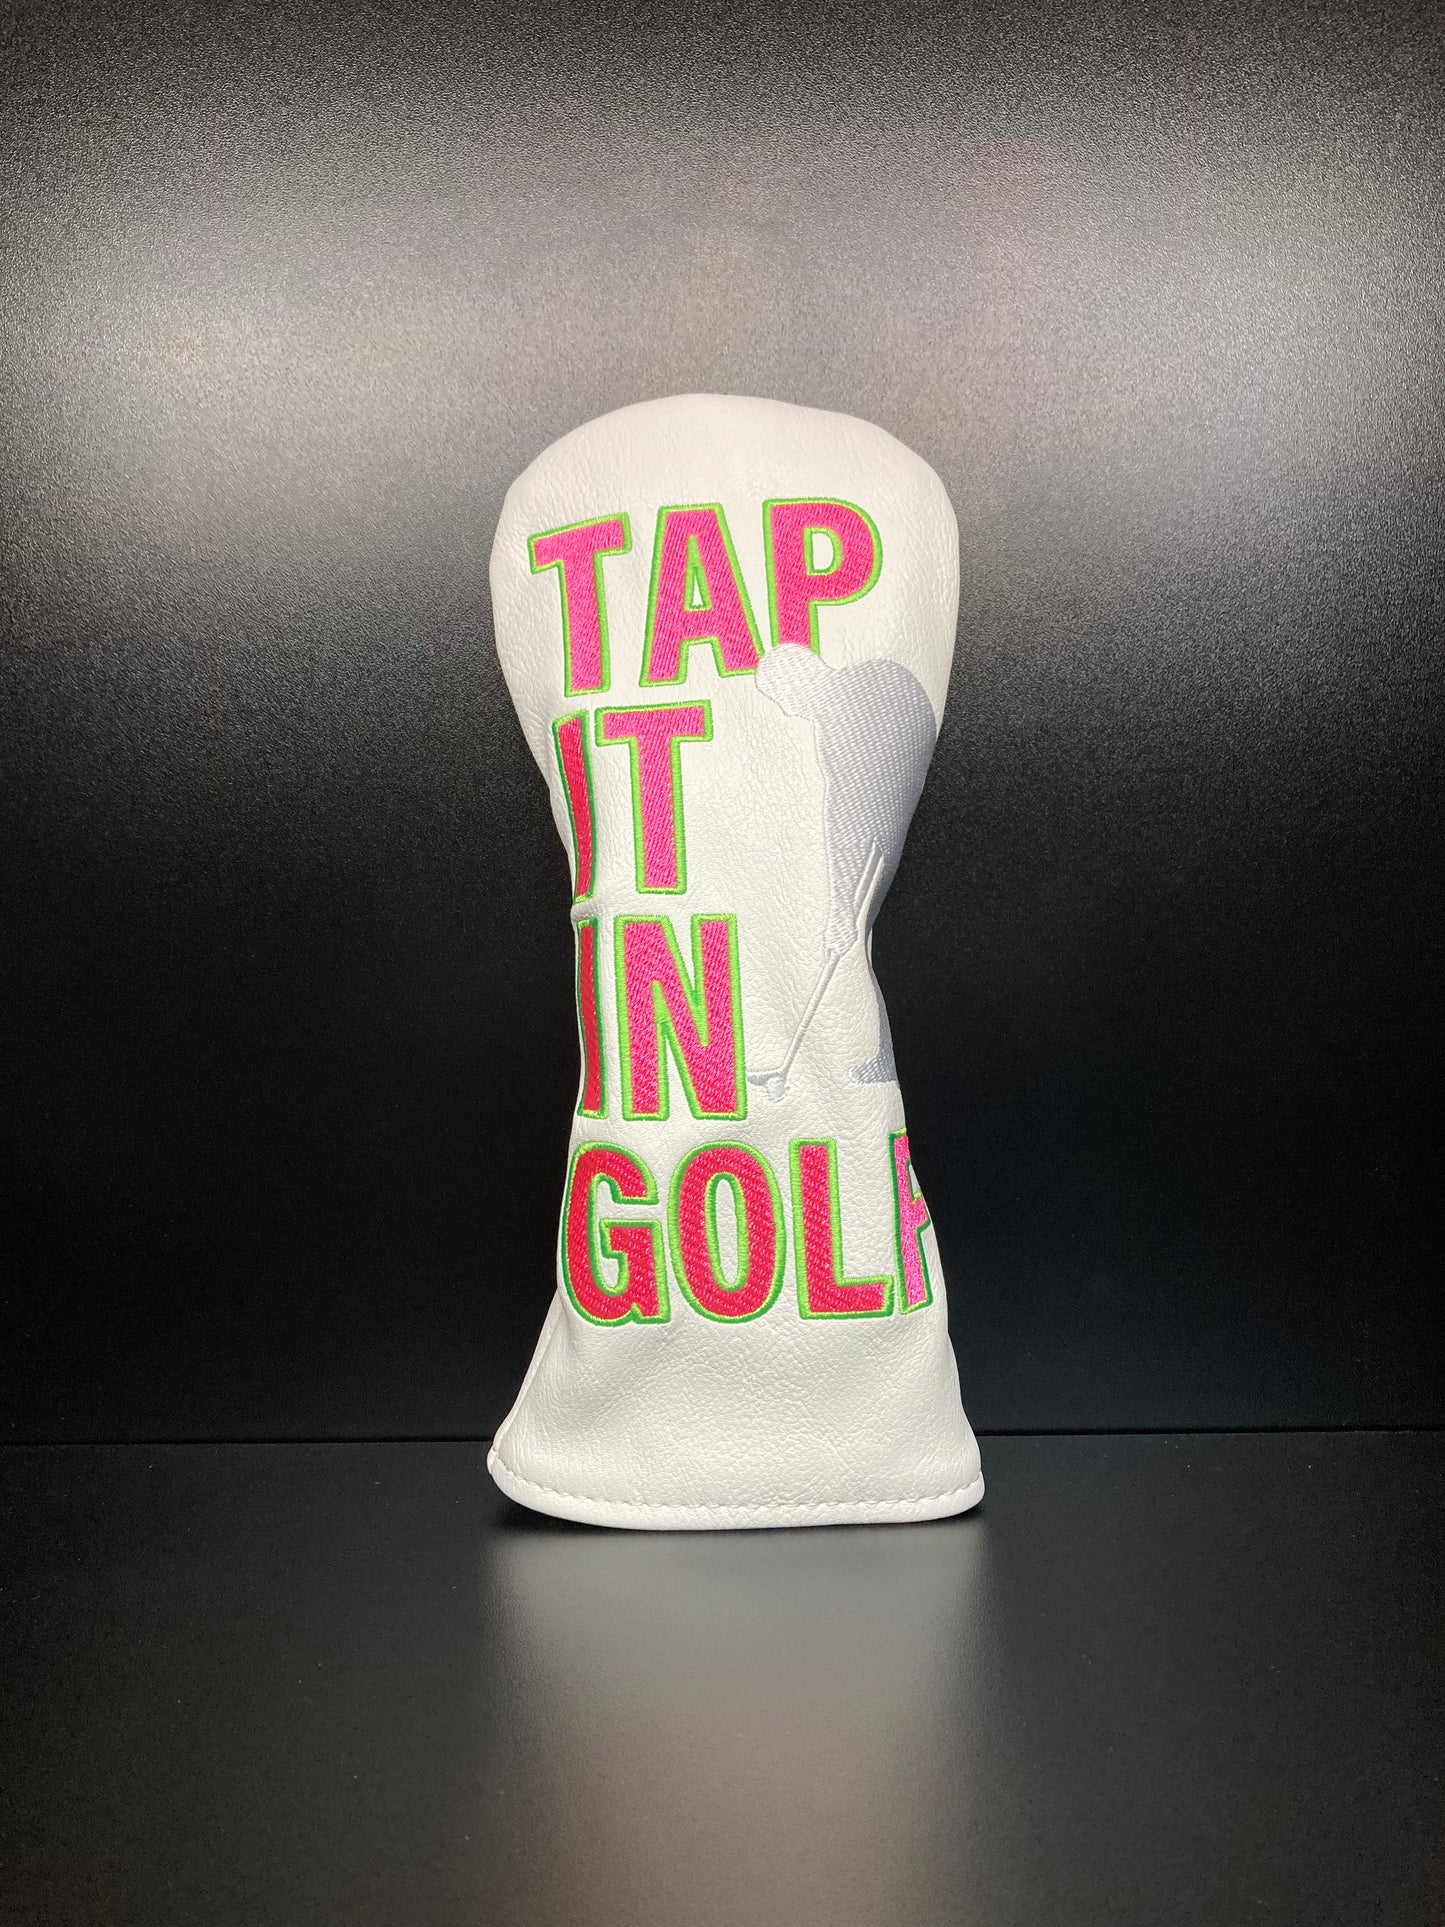 Tap It In! Silhouette Golfer Headcover